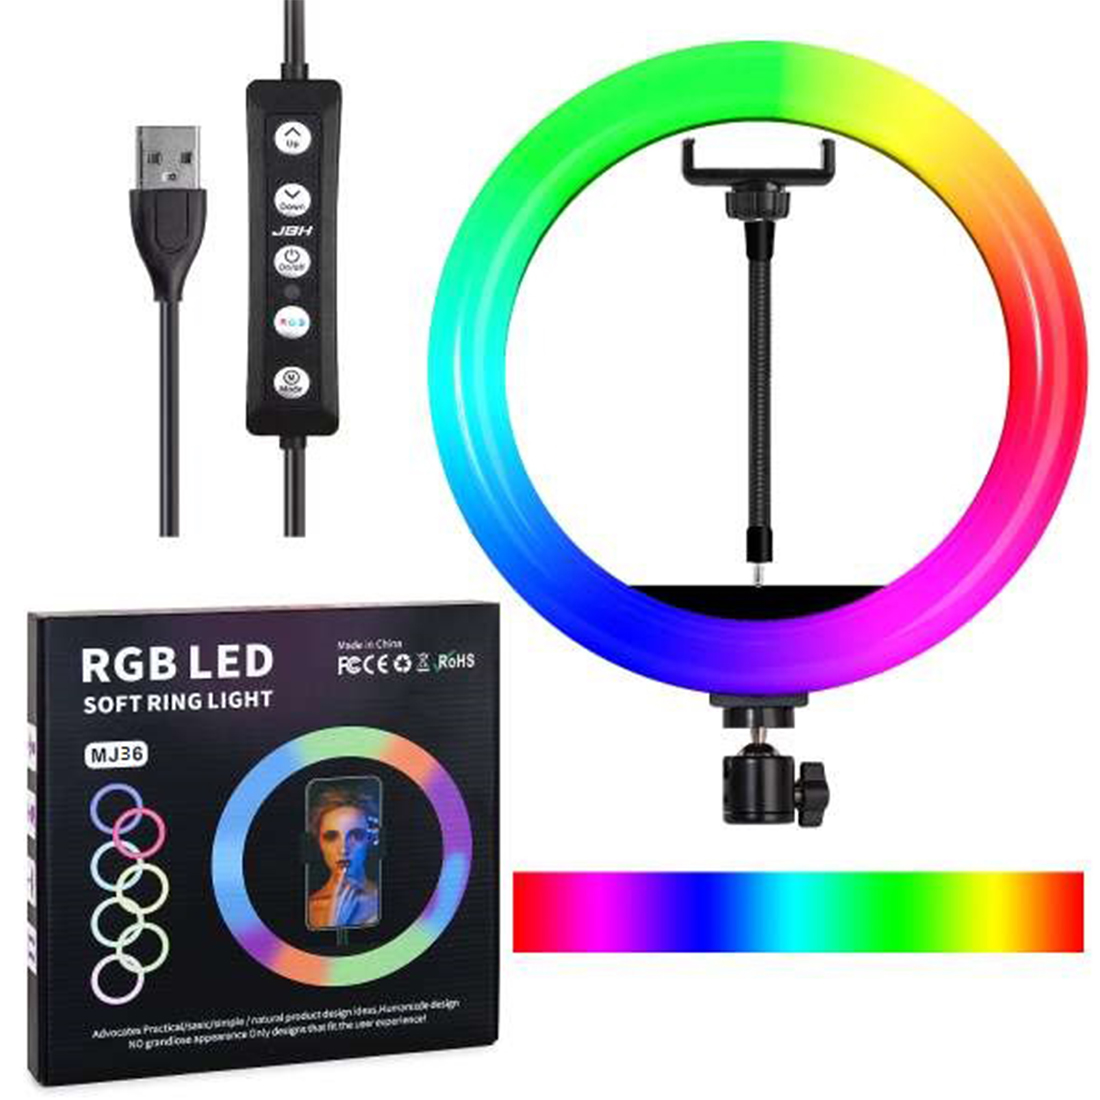 Цветная RGB кольцевая светодиодная лампа MJ36 - 36 см, со штативом 1.9 м